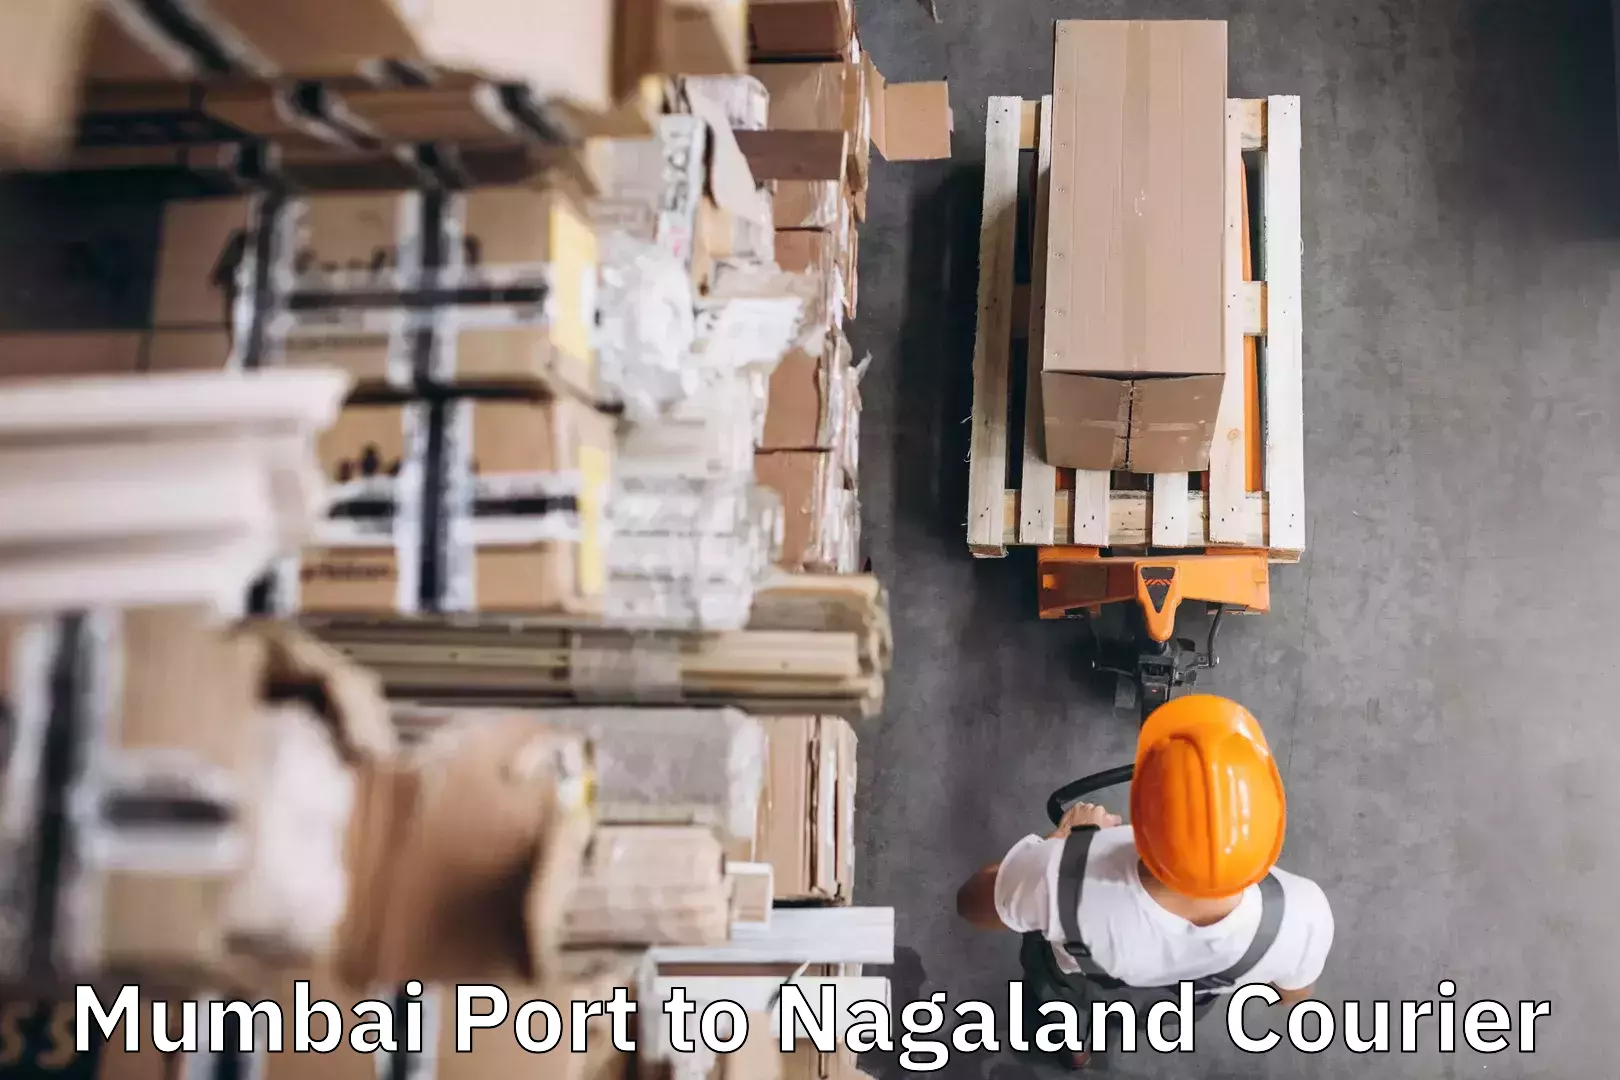 Luggage shipment tracking Mumbai Port to Dimapur